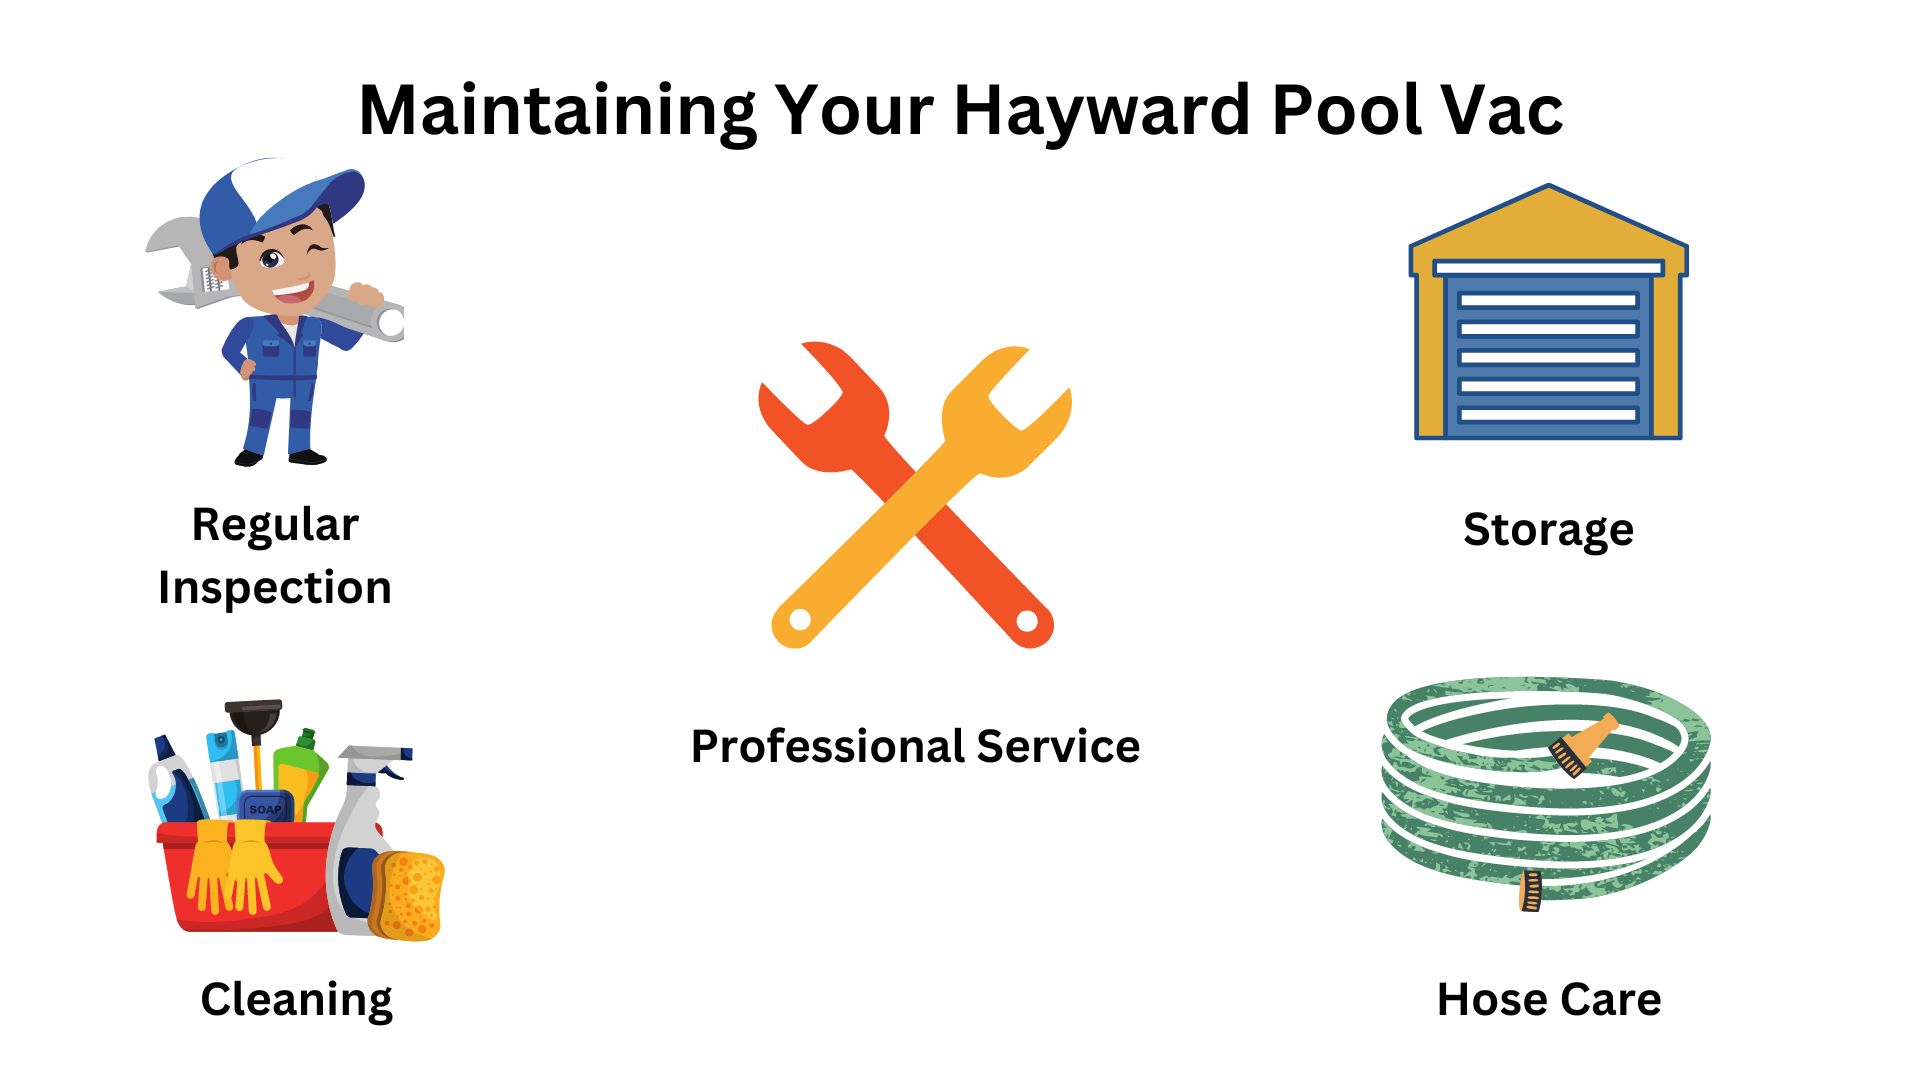 Maintaining Your Hayward Pool Vac